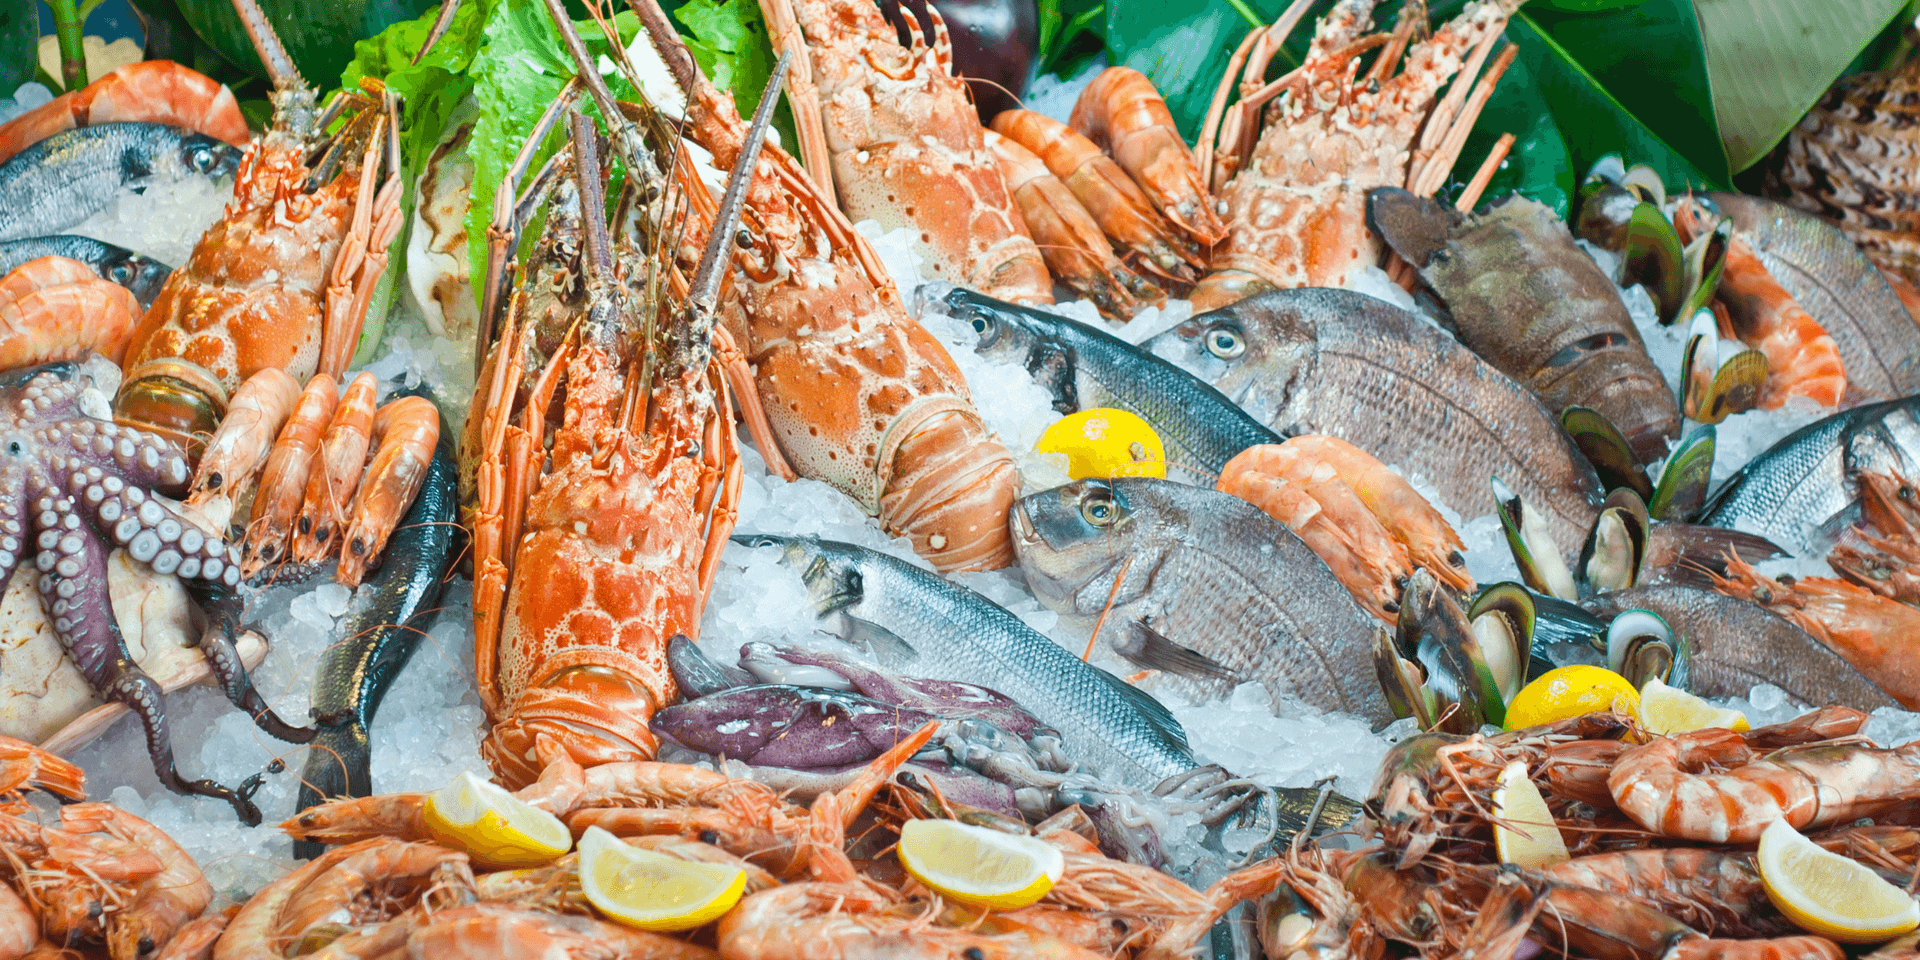 a display of seafood